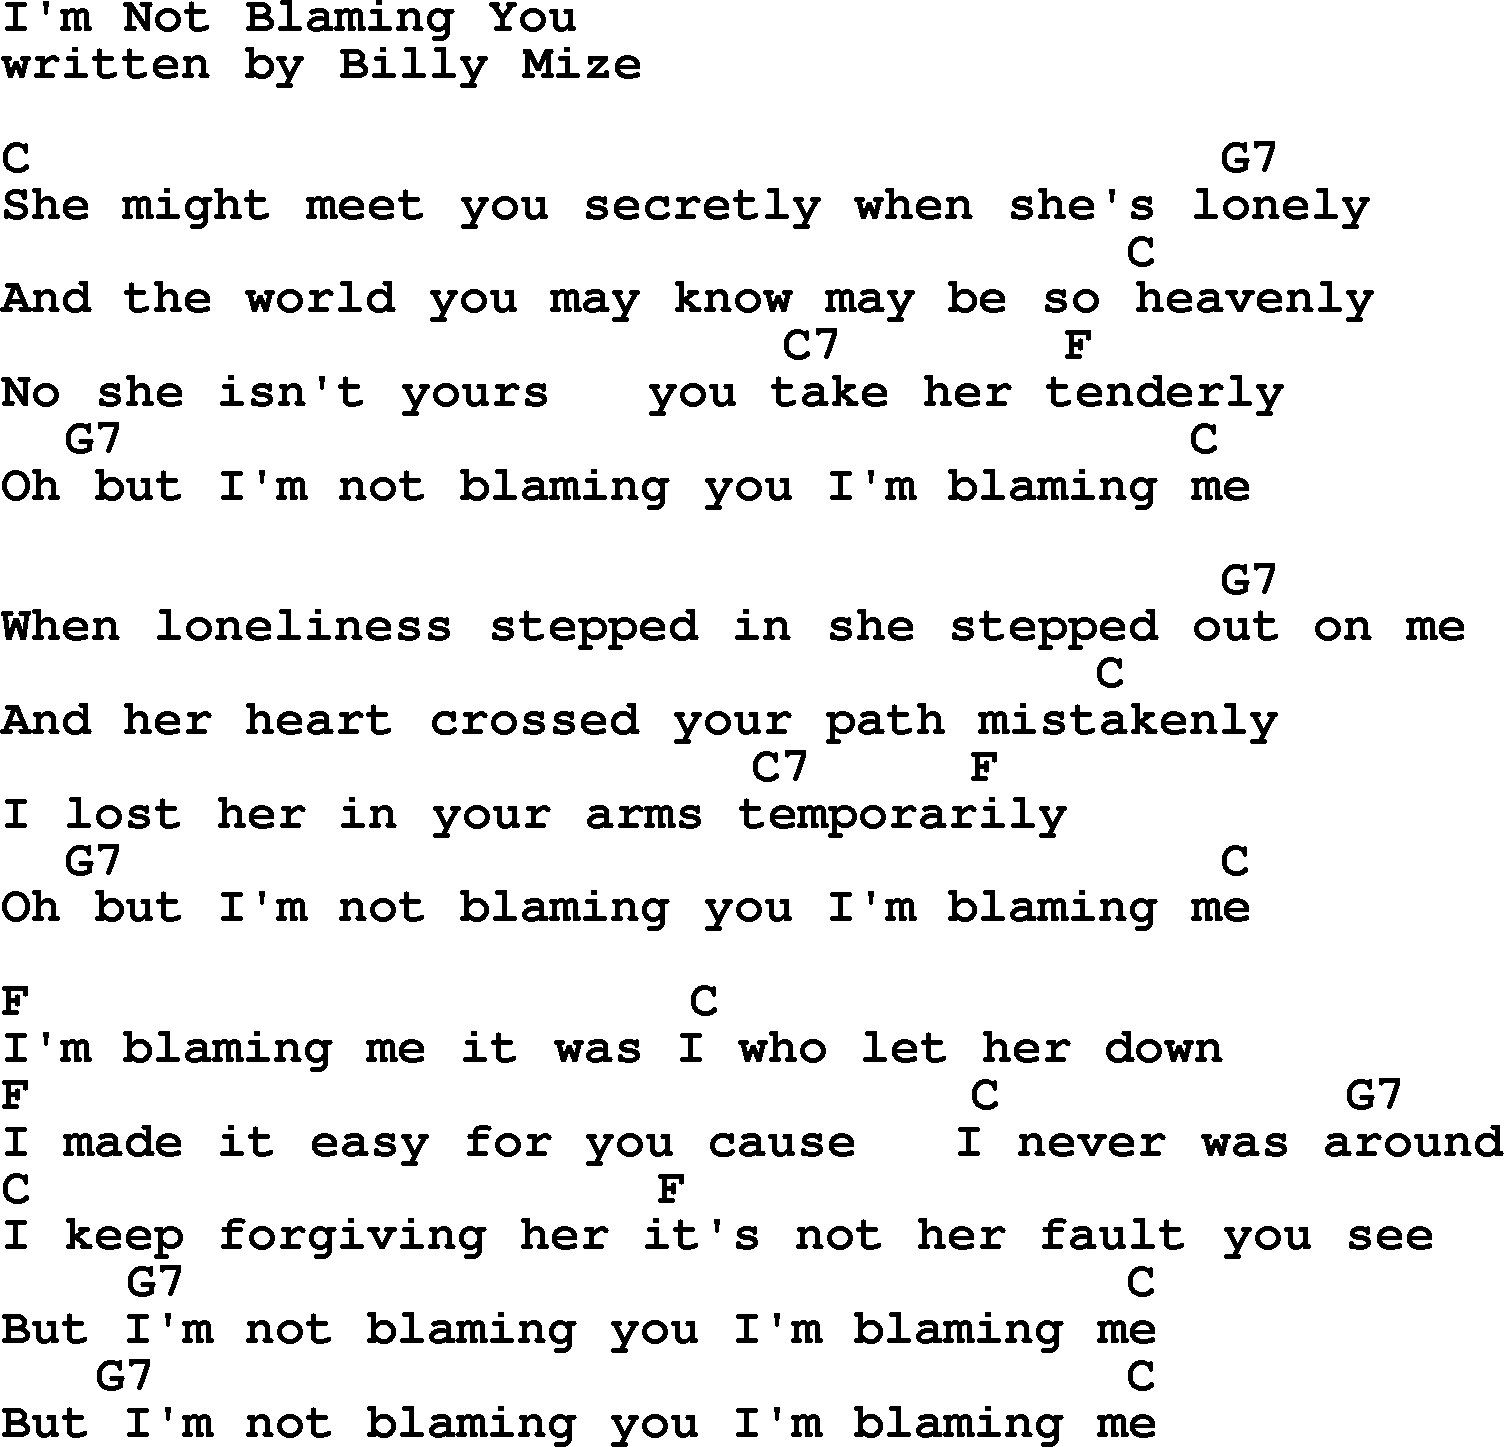 Marty Robbins song: I'm Not Blaming You, lyrics and chords